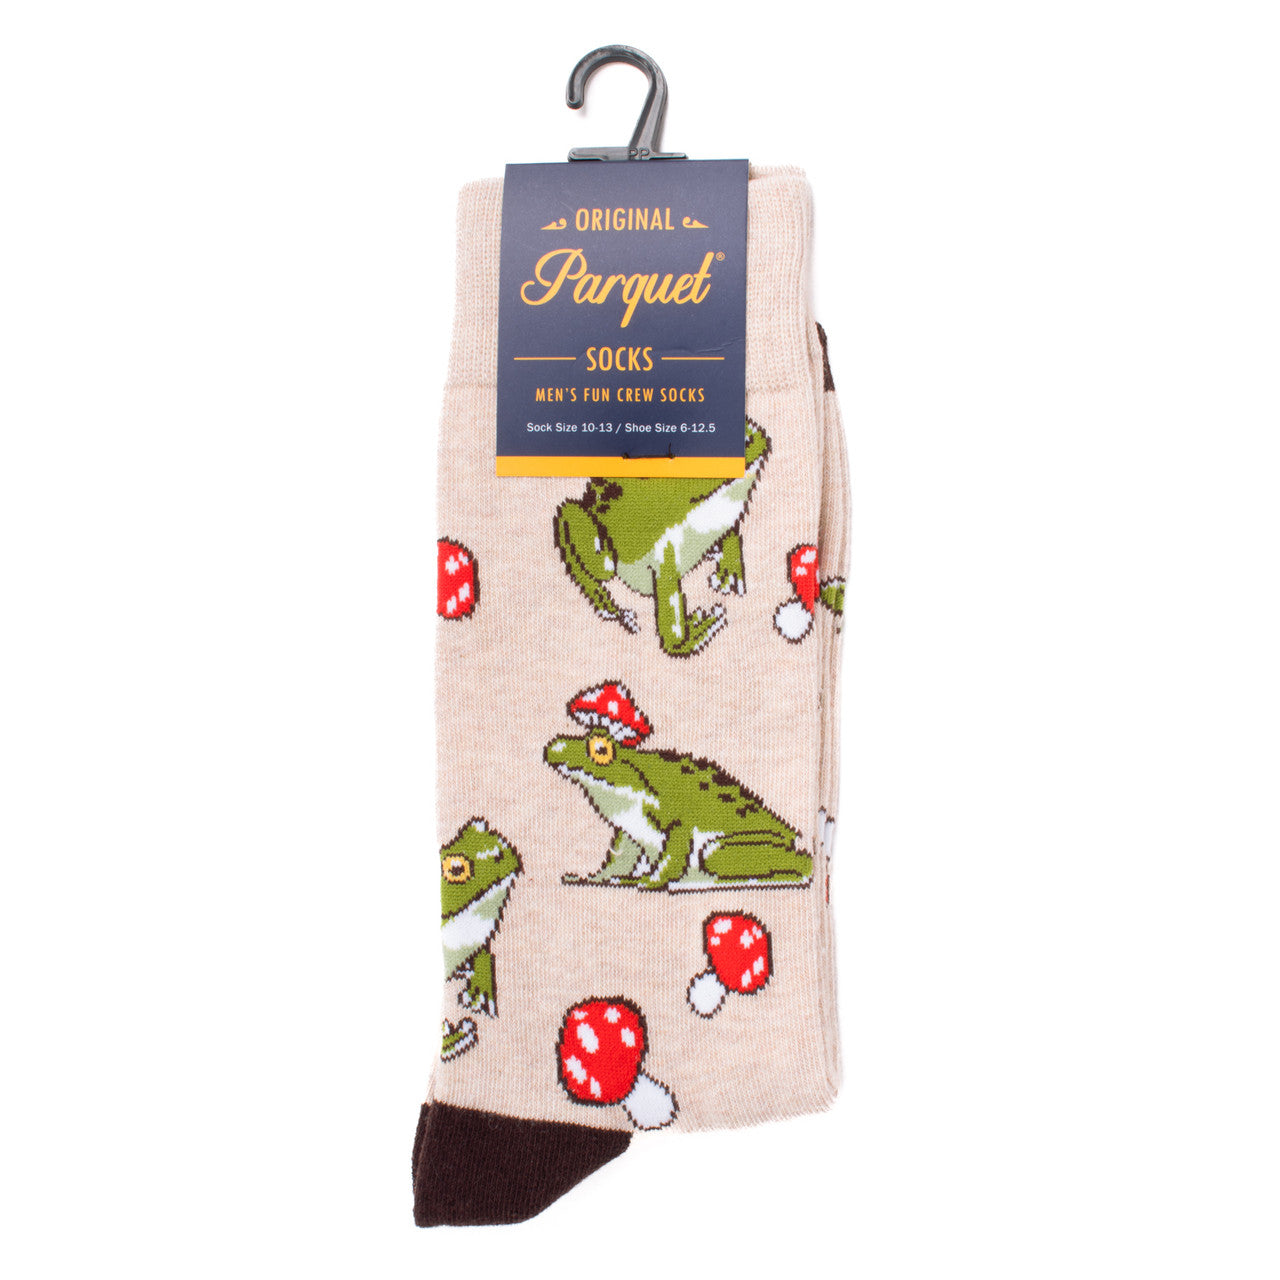 Prince Charming Socks Novelty Sock Funny Socks Frog Mushroom Theme Socks Fun Gifts Mens Socks Funny Groomsmen Socks